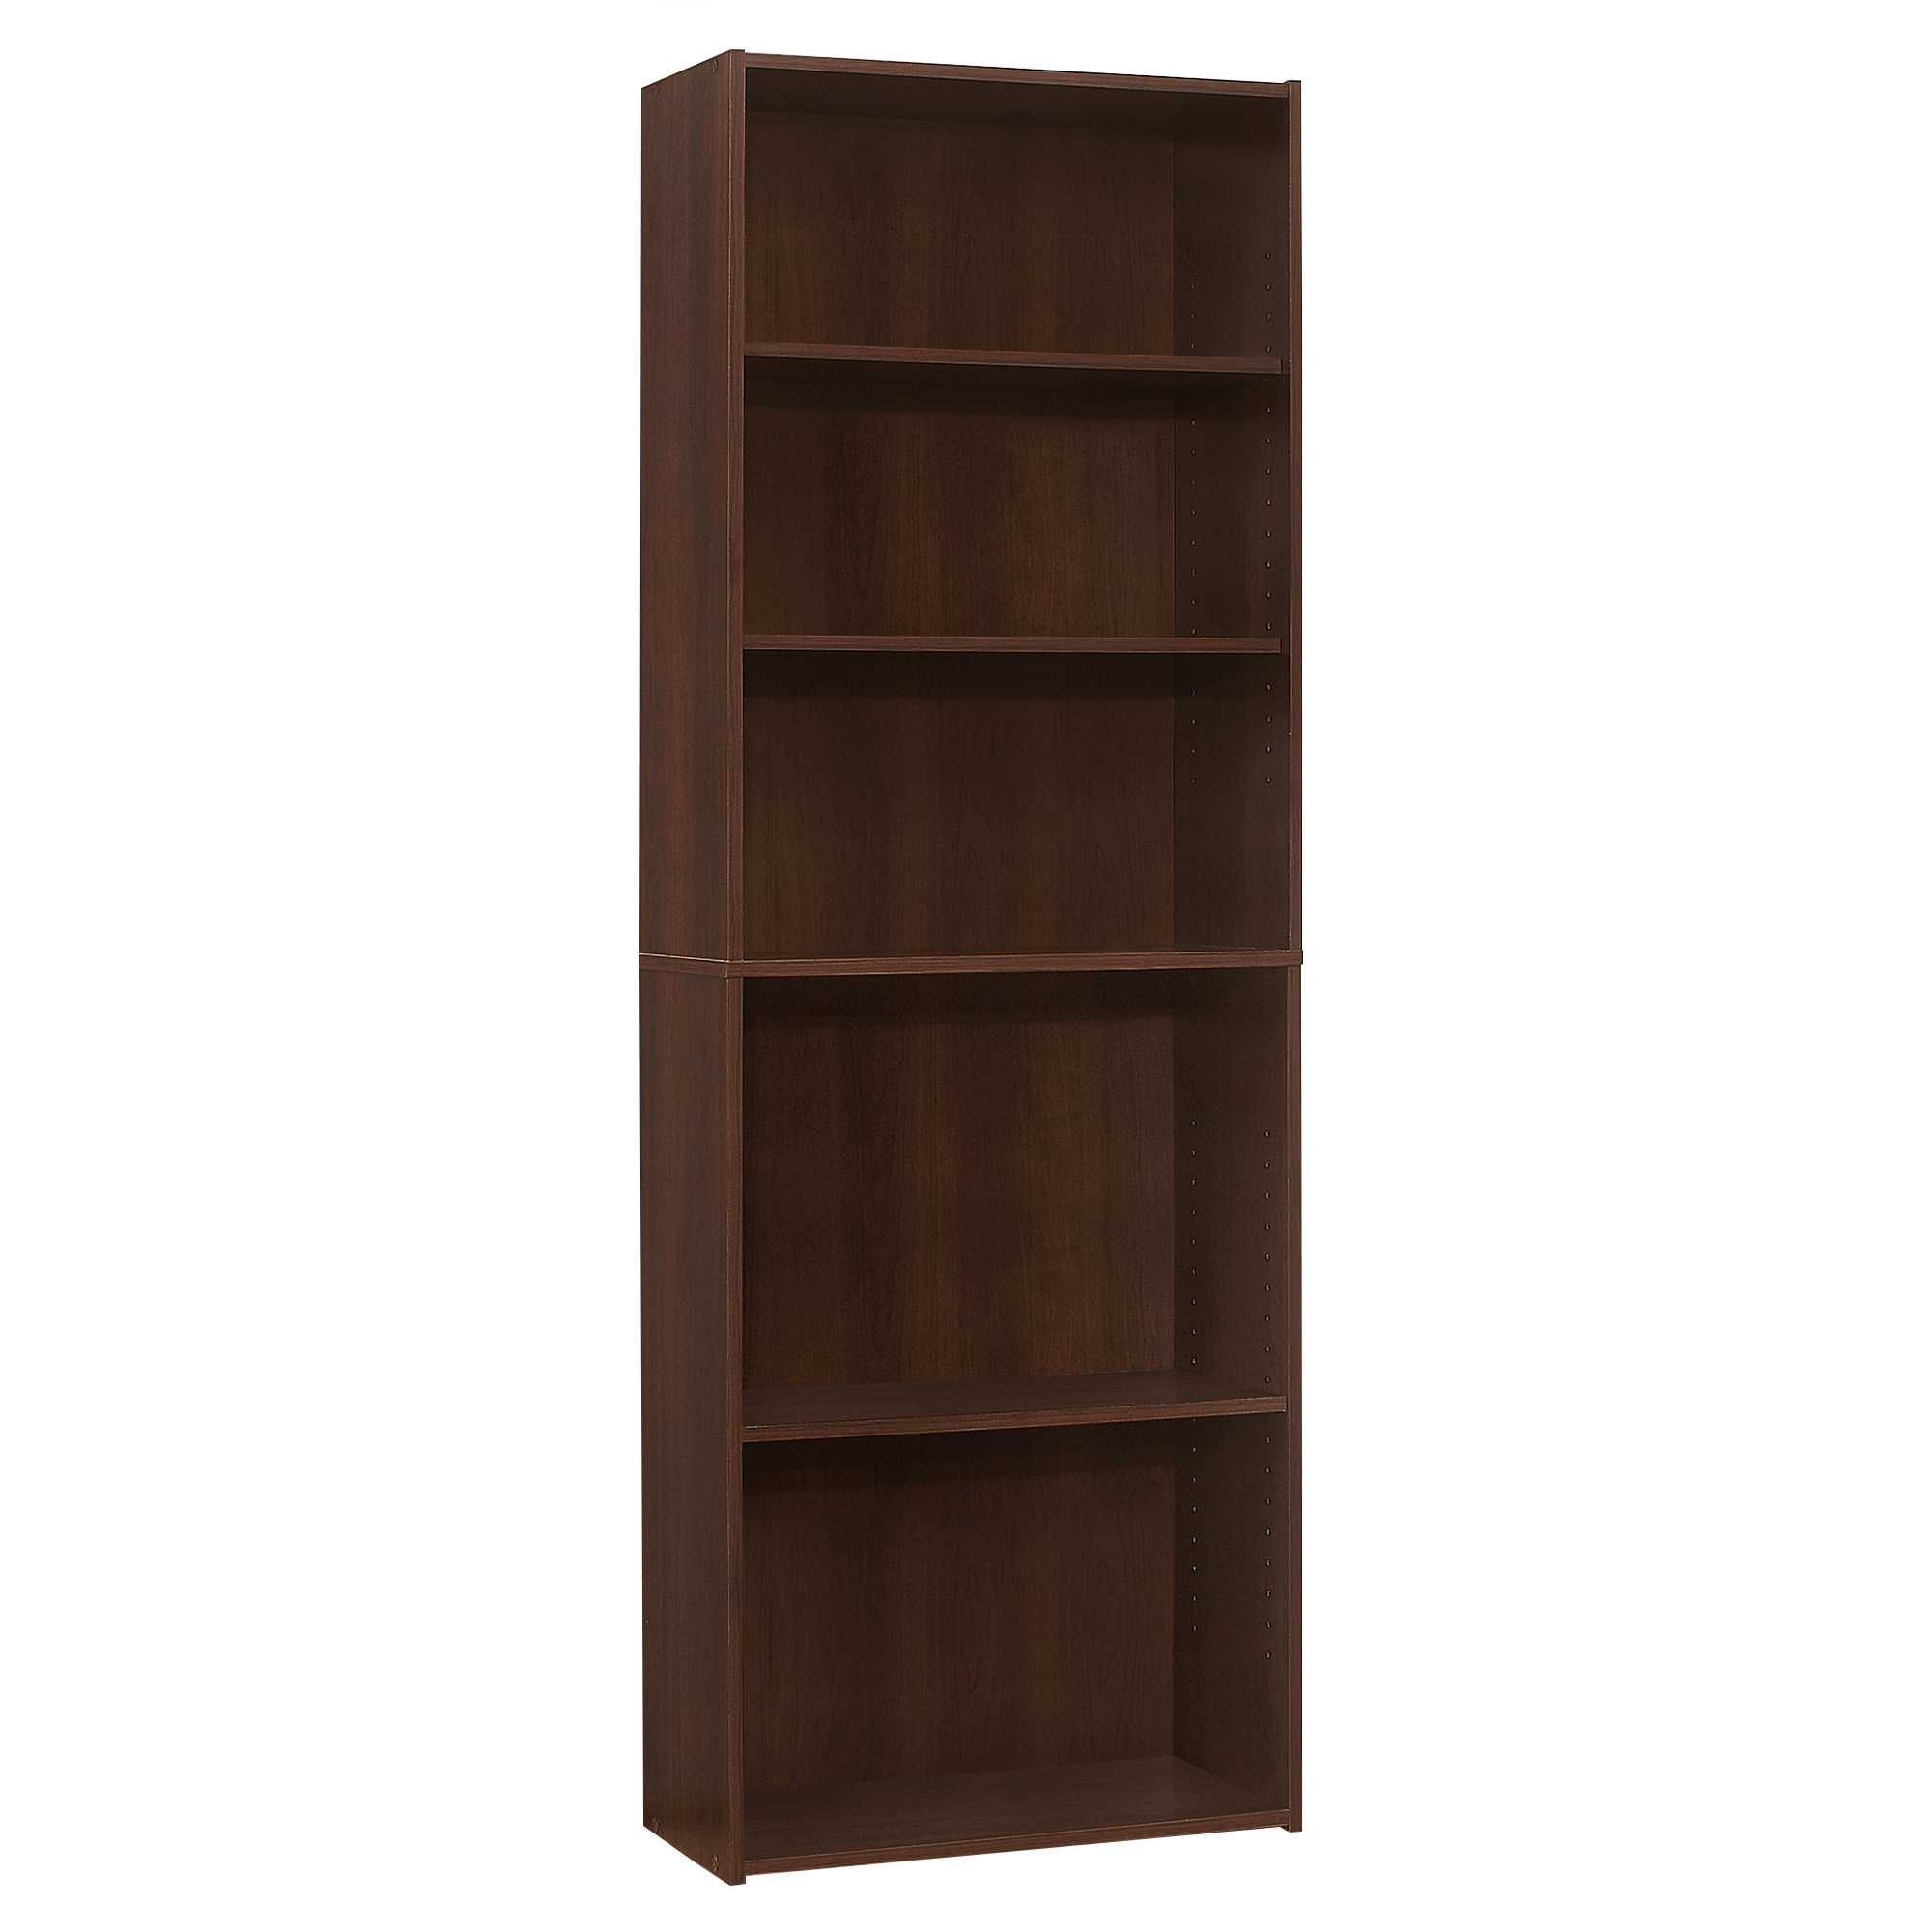 11.75" x 24.75" x 71.25" Cherry 5 Shelves Bookcase